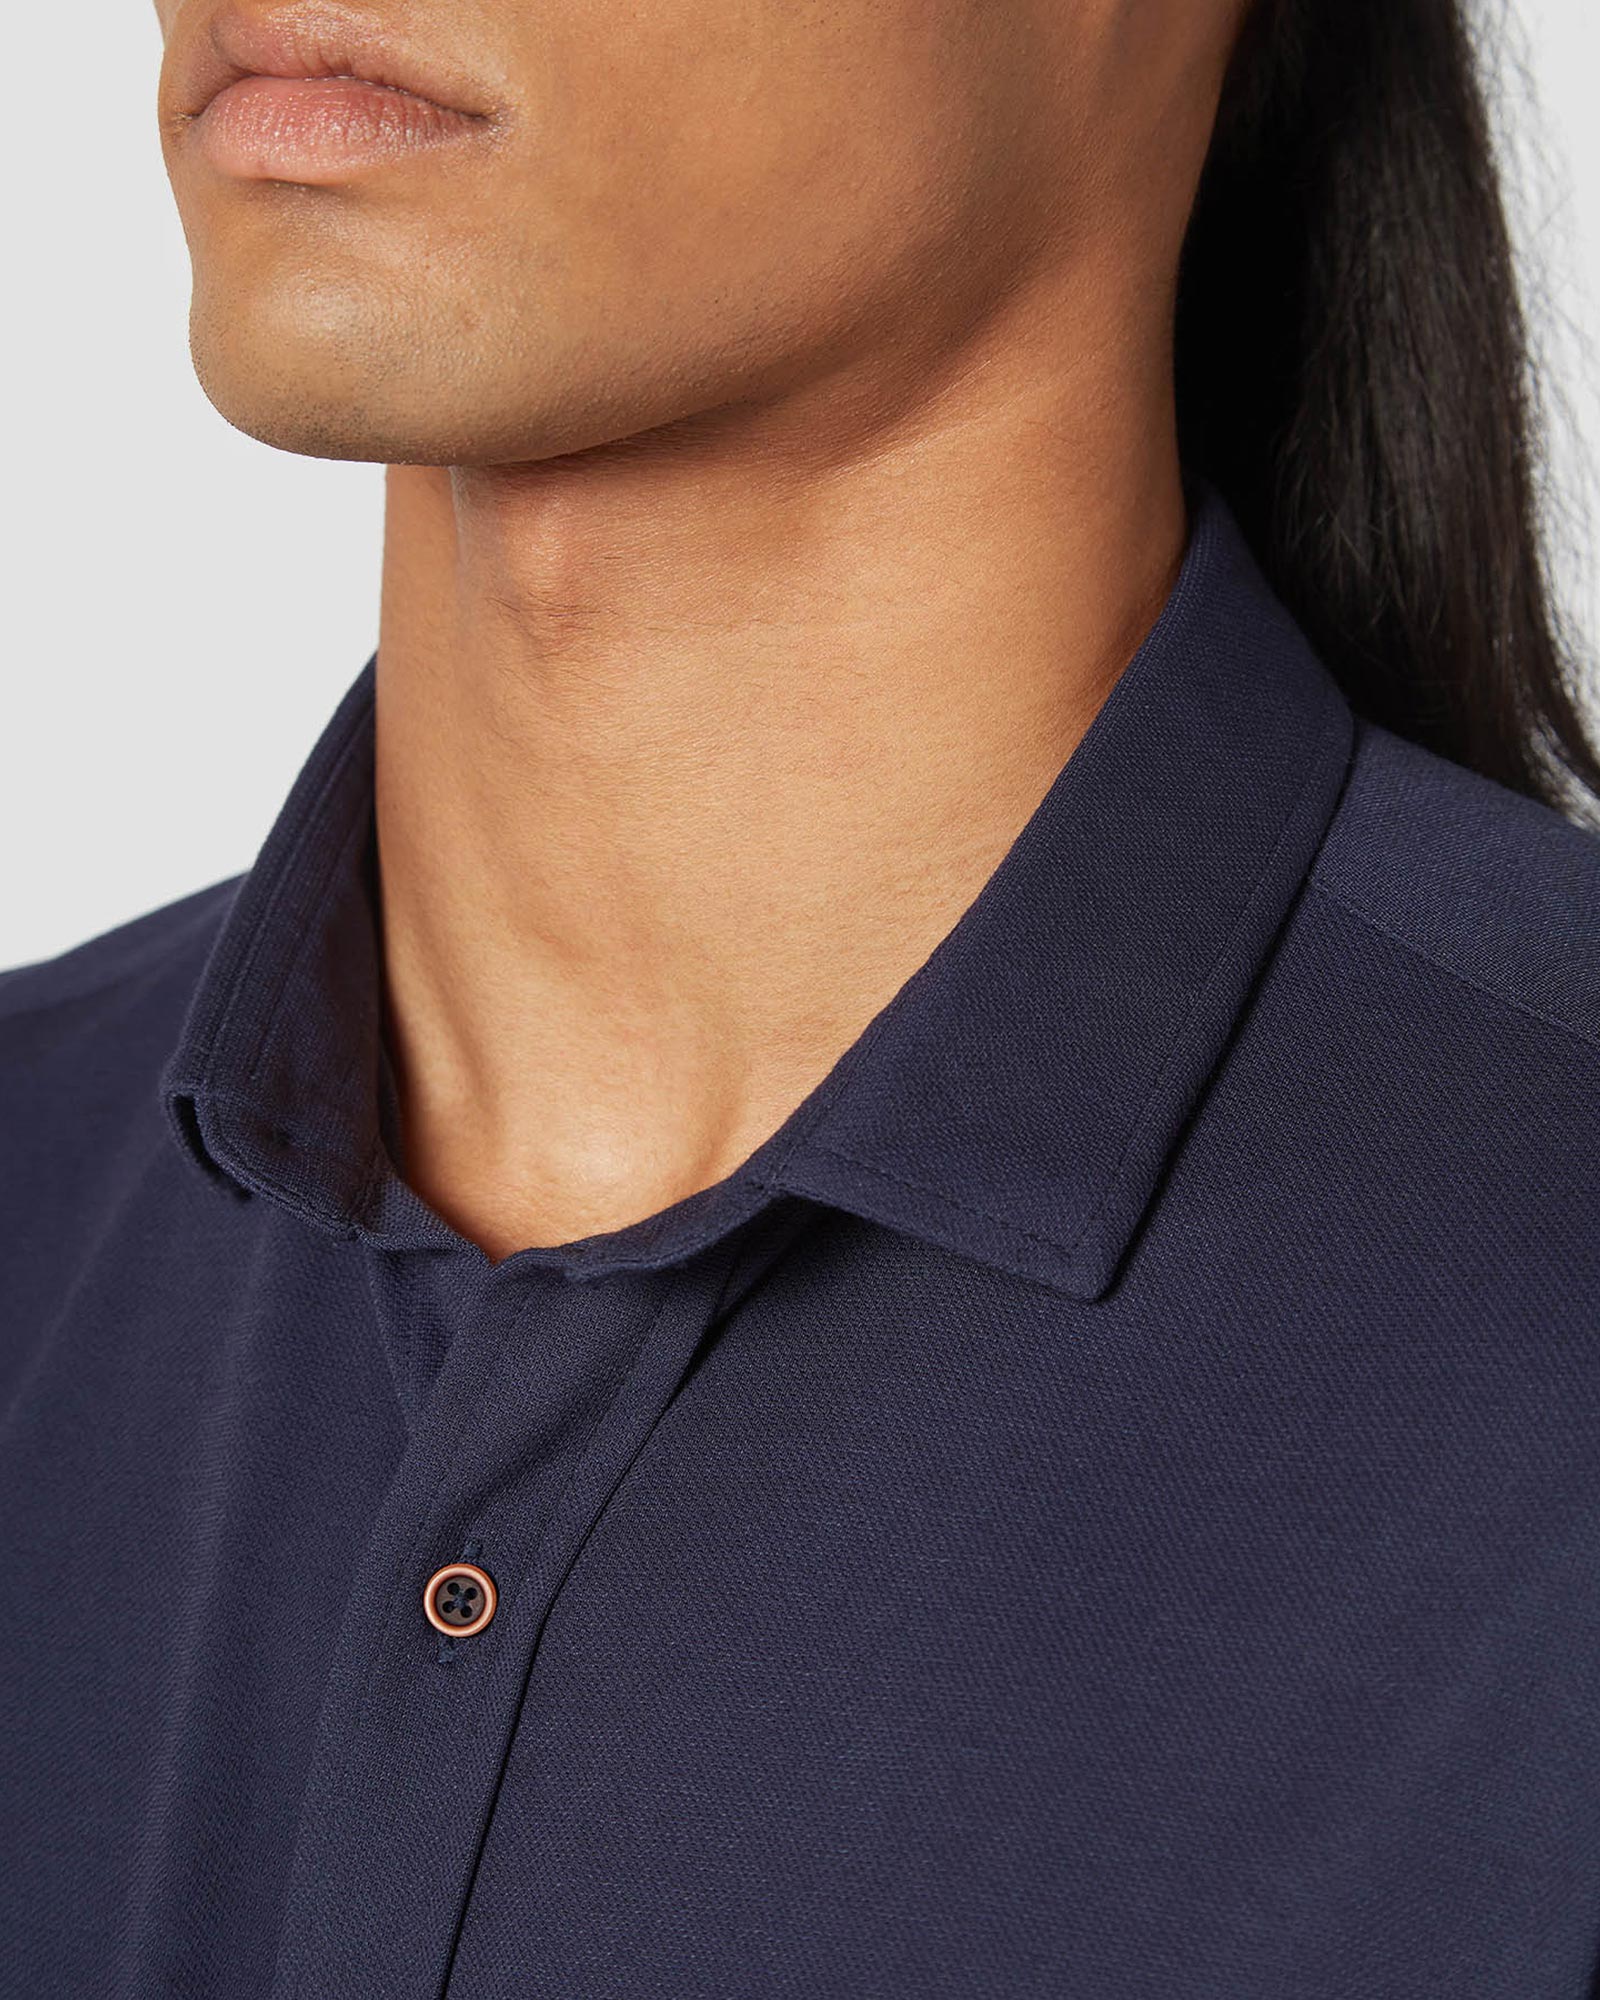 Bombay Shirt Company - Azurite Knit Shirt